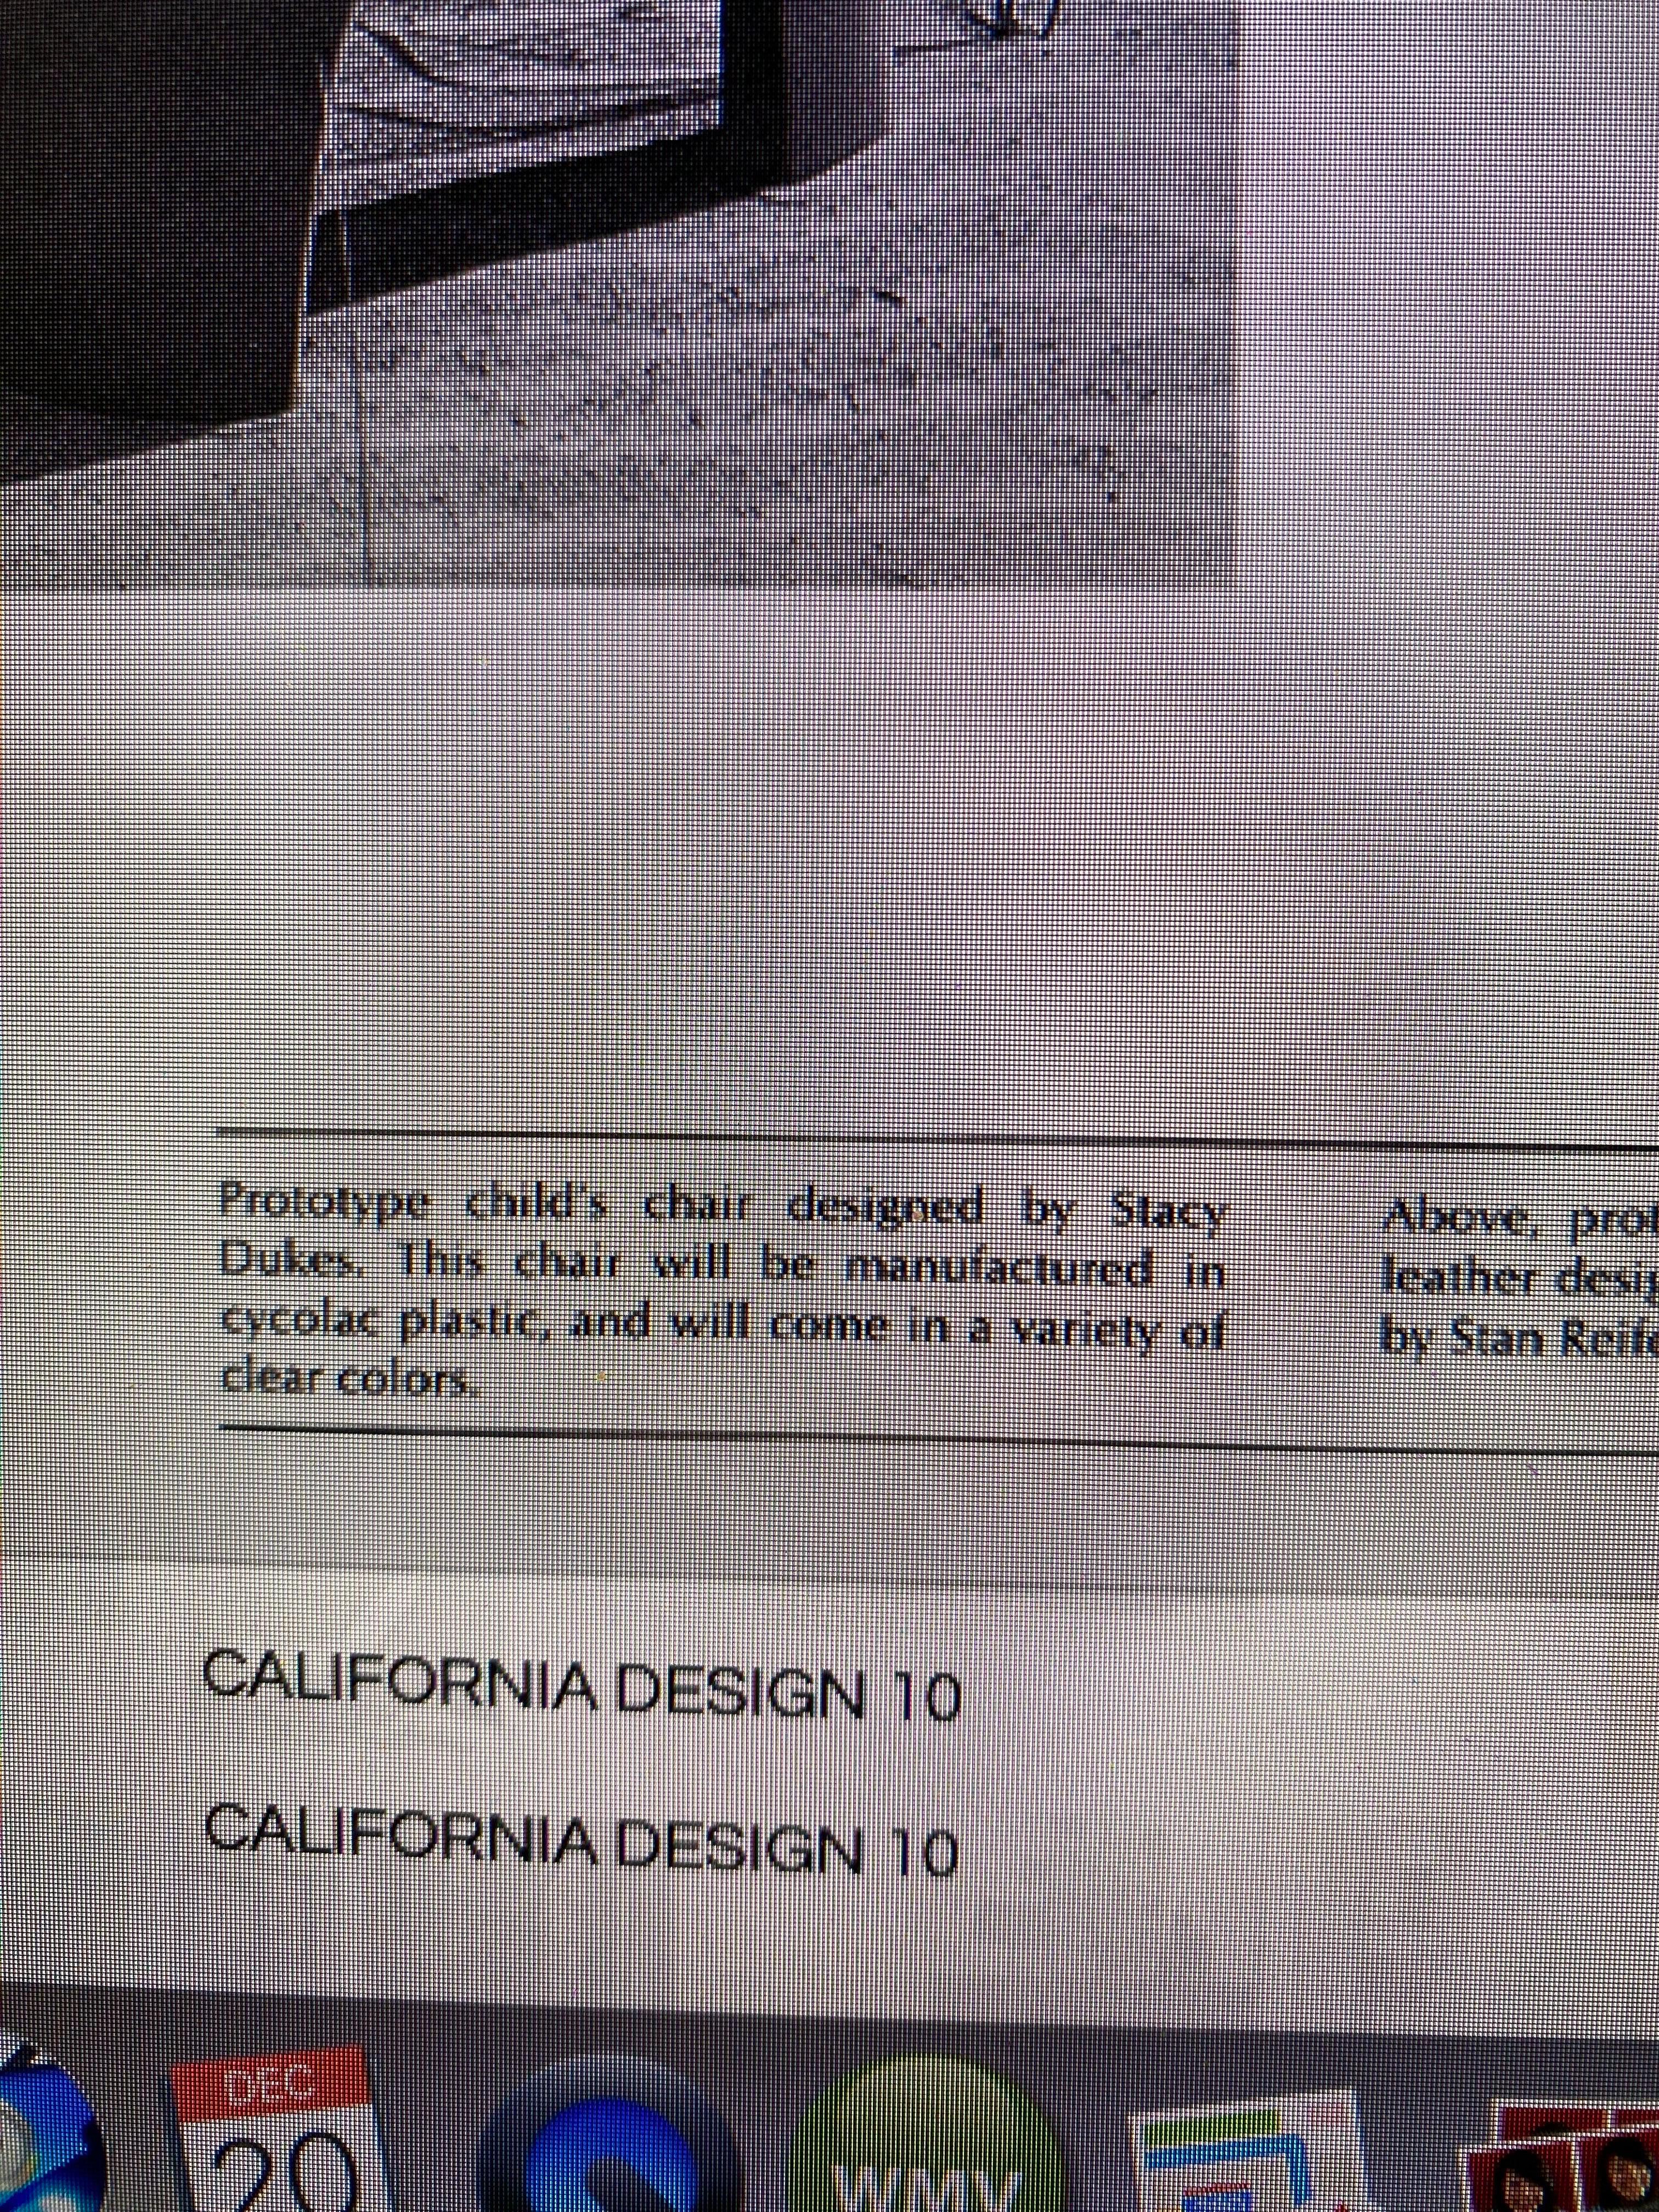 Prototype de tabouret en fibre de verre Stacy Dukes de California Design 10/ 1968  en vente 8